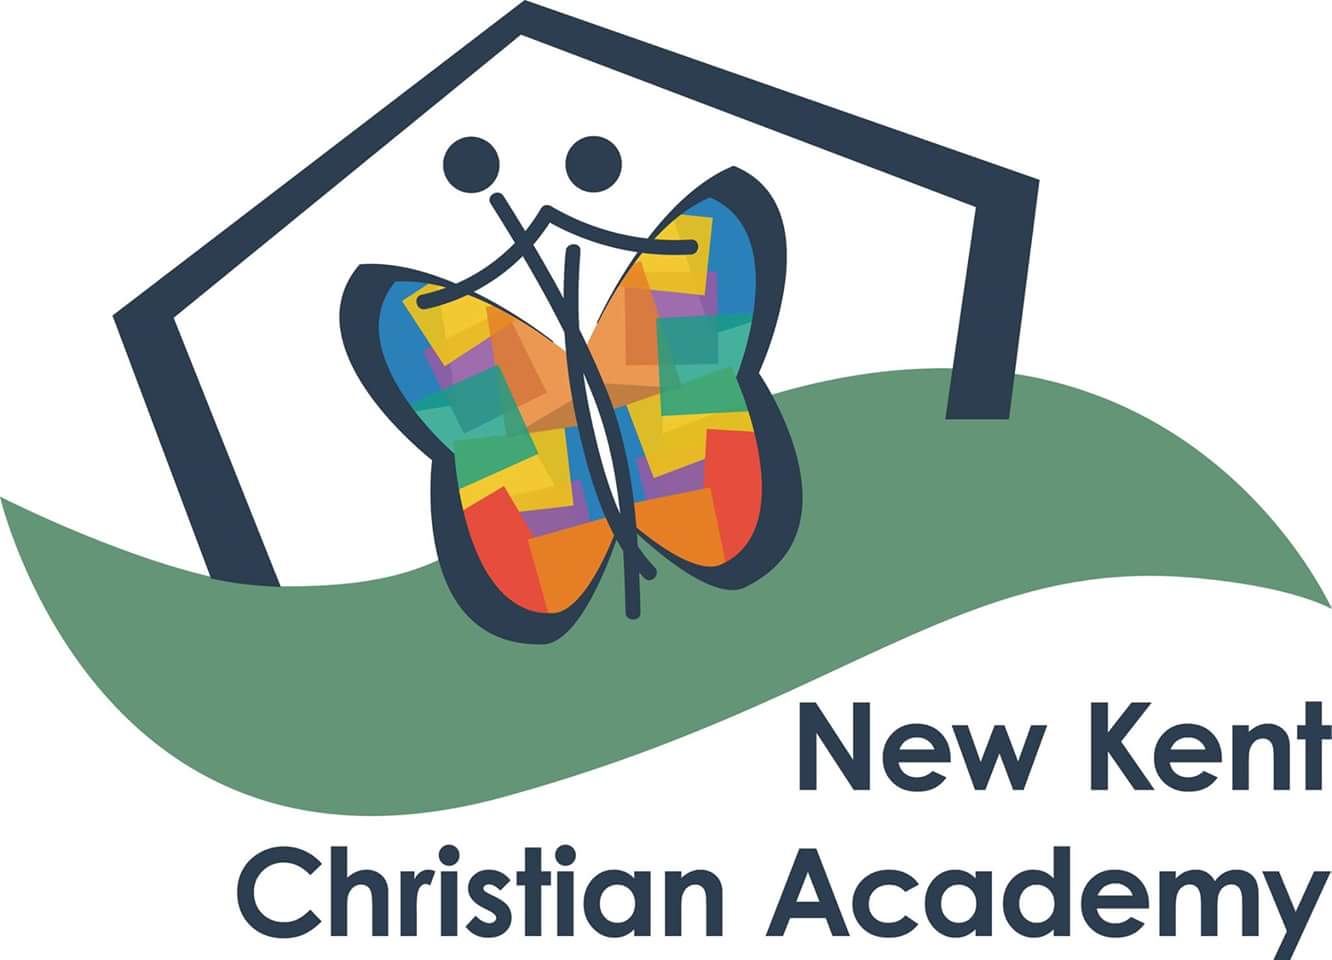 New Kent Christian Academy